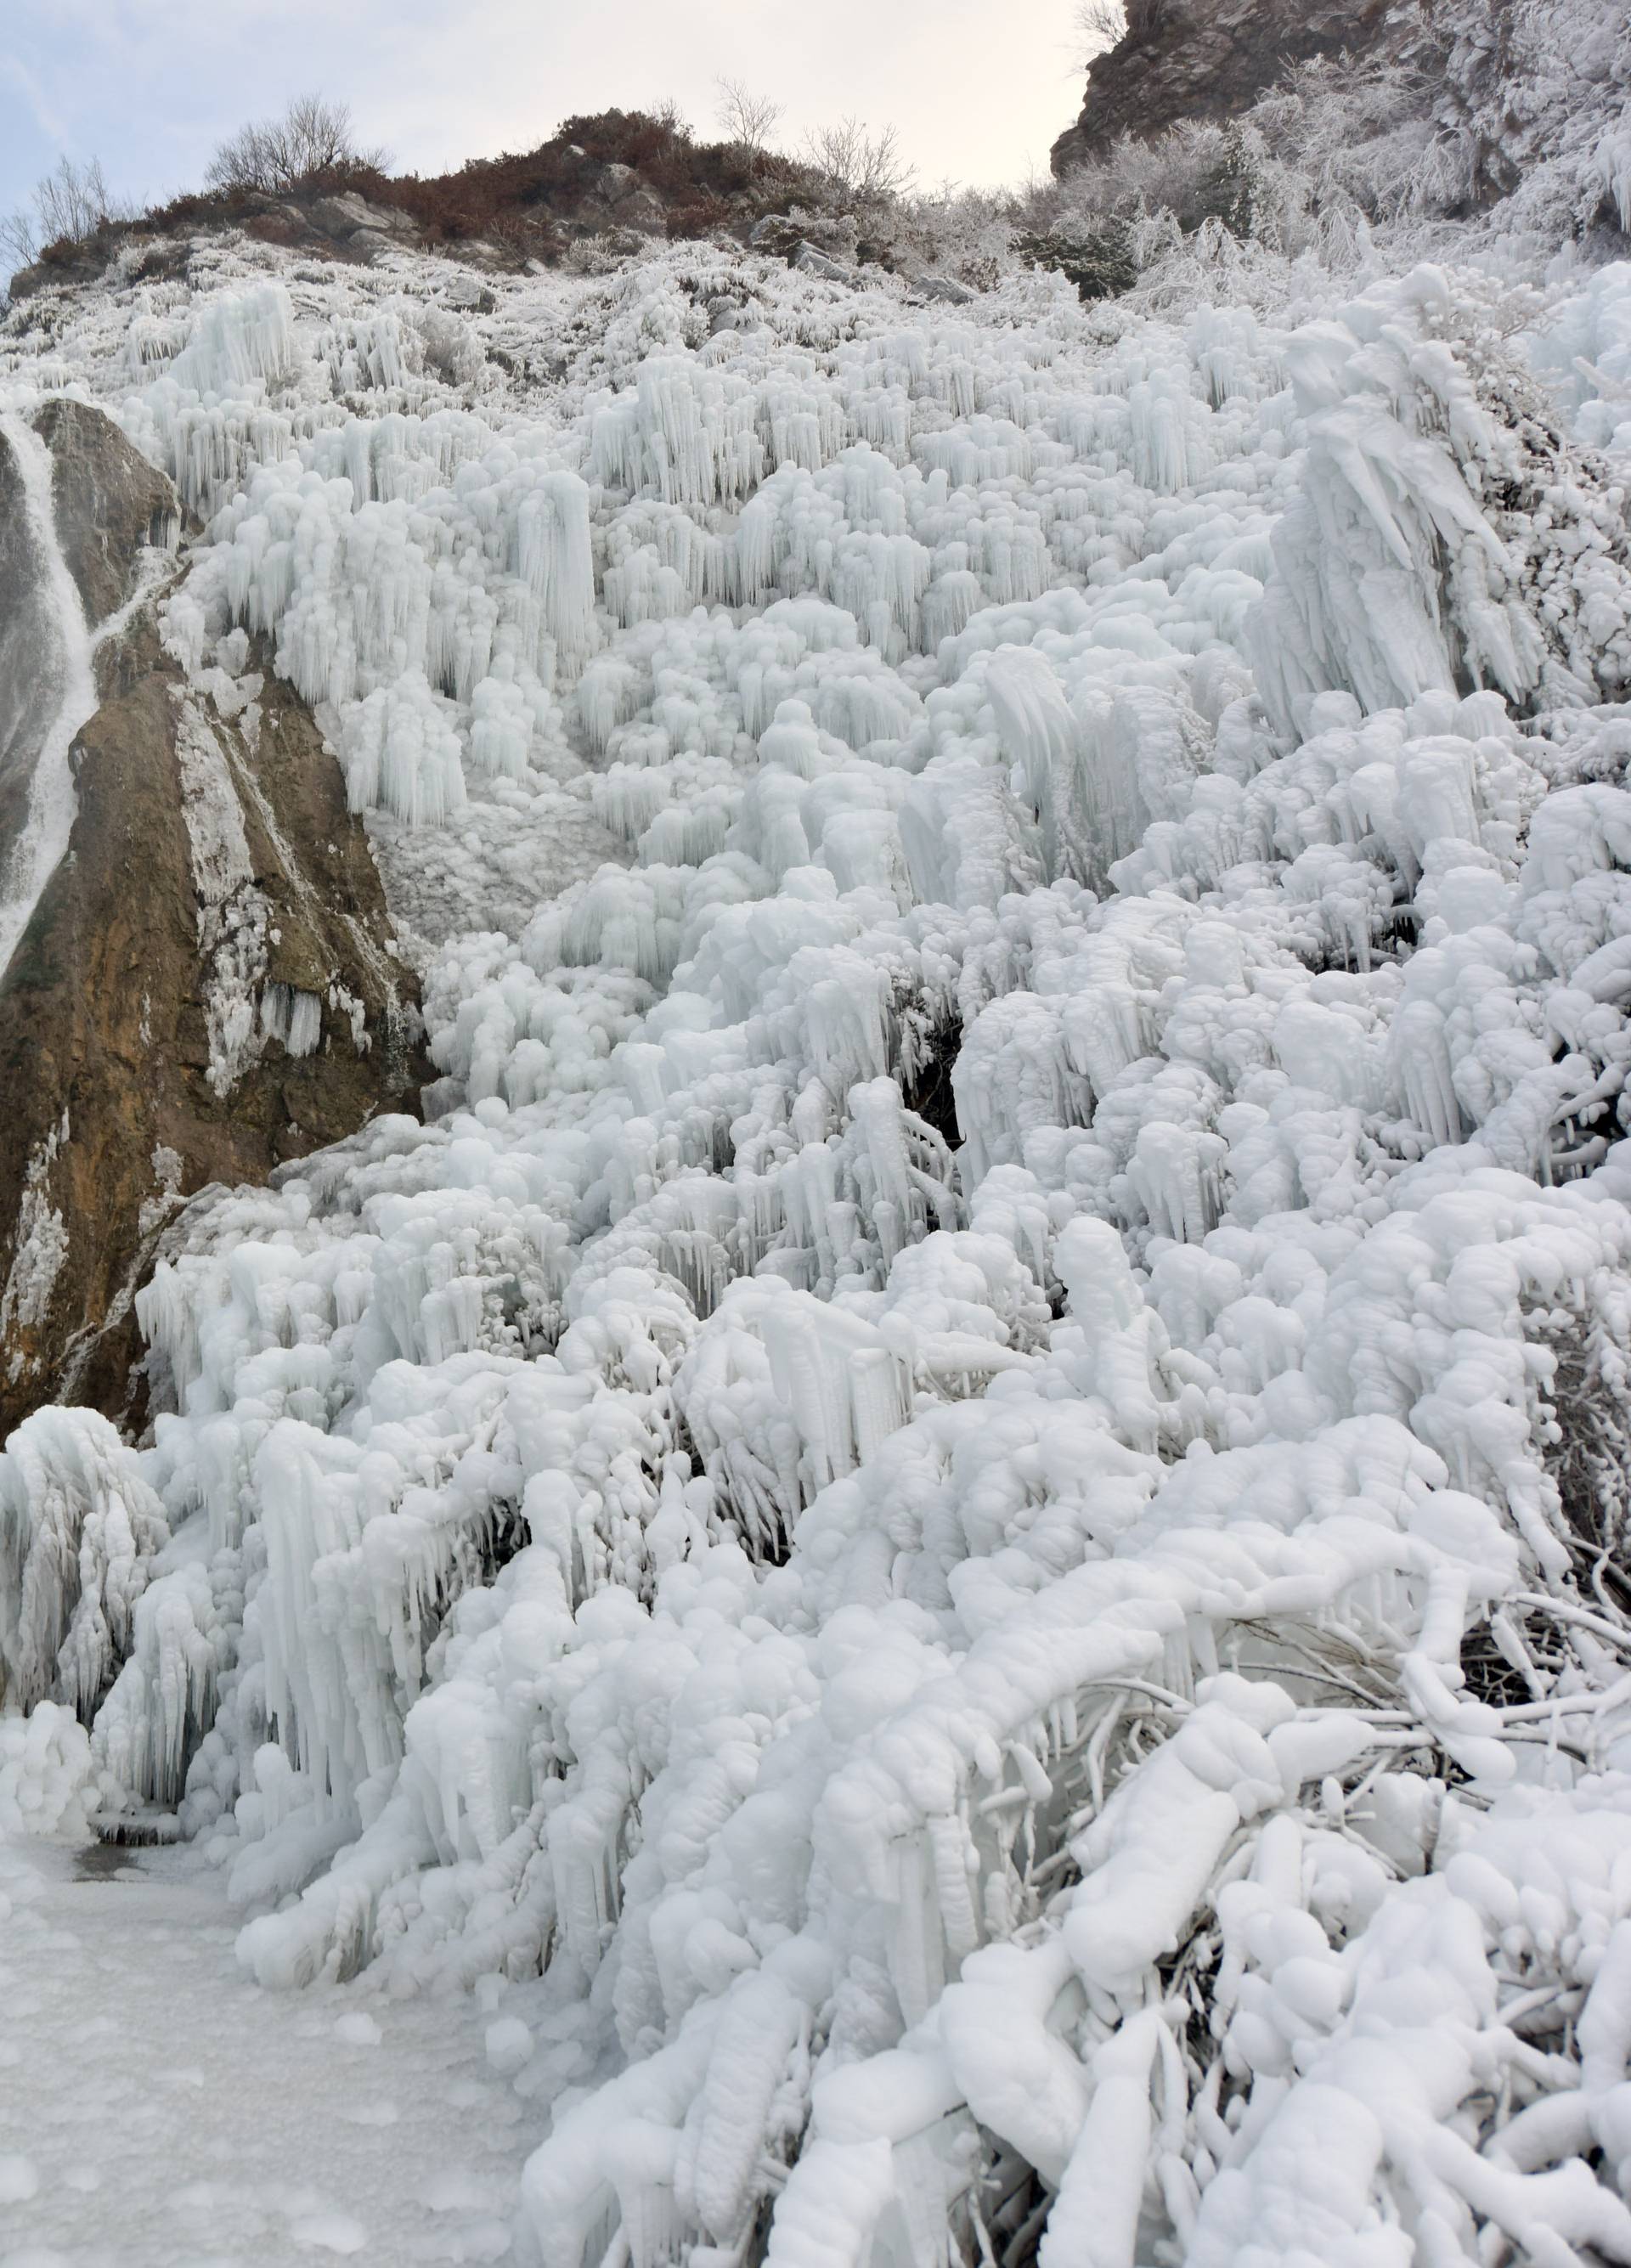 Smrznuta senjska riva, zaleđen slap u Kninu, barke okovao led